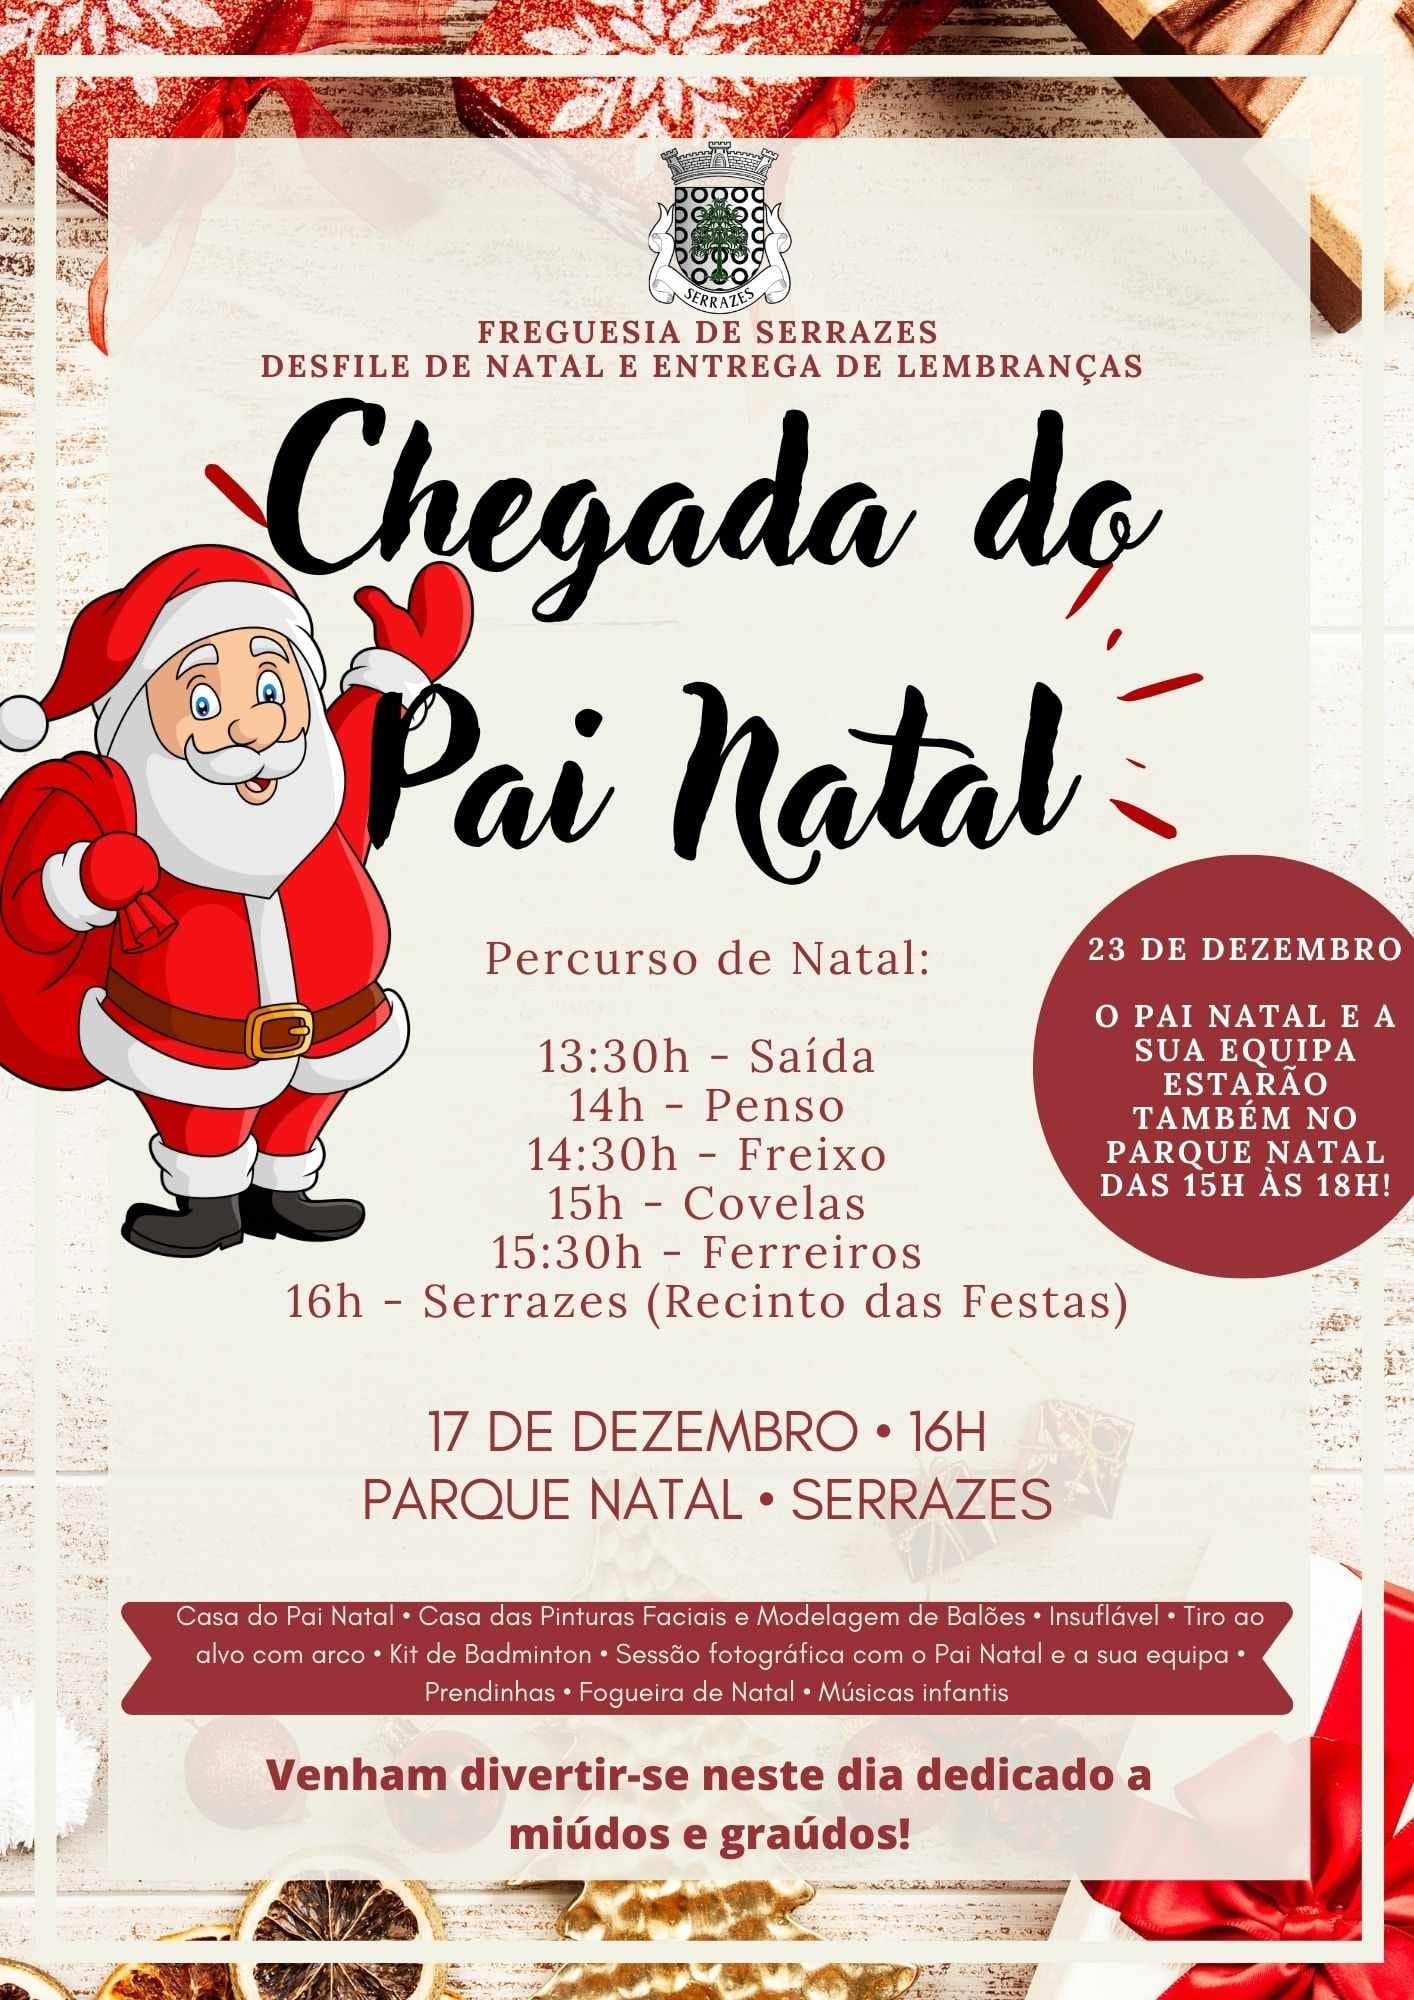 You are currently viewing 17 de dezembro – Chegada do Pai Natal